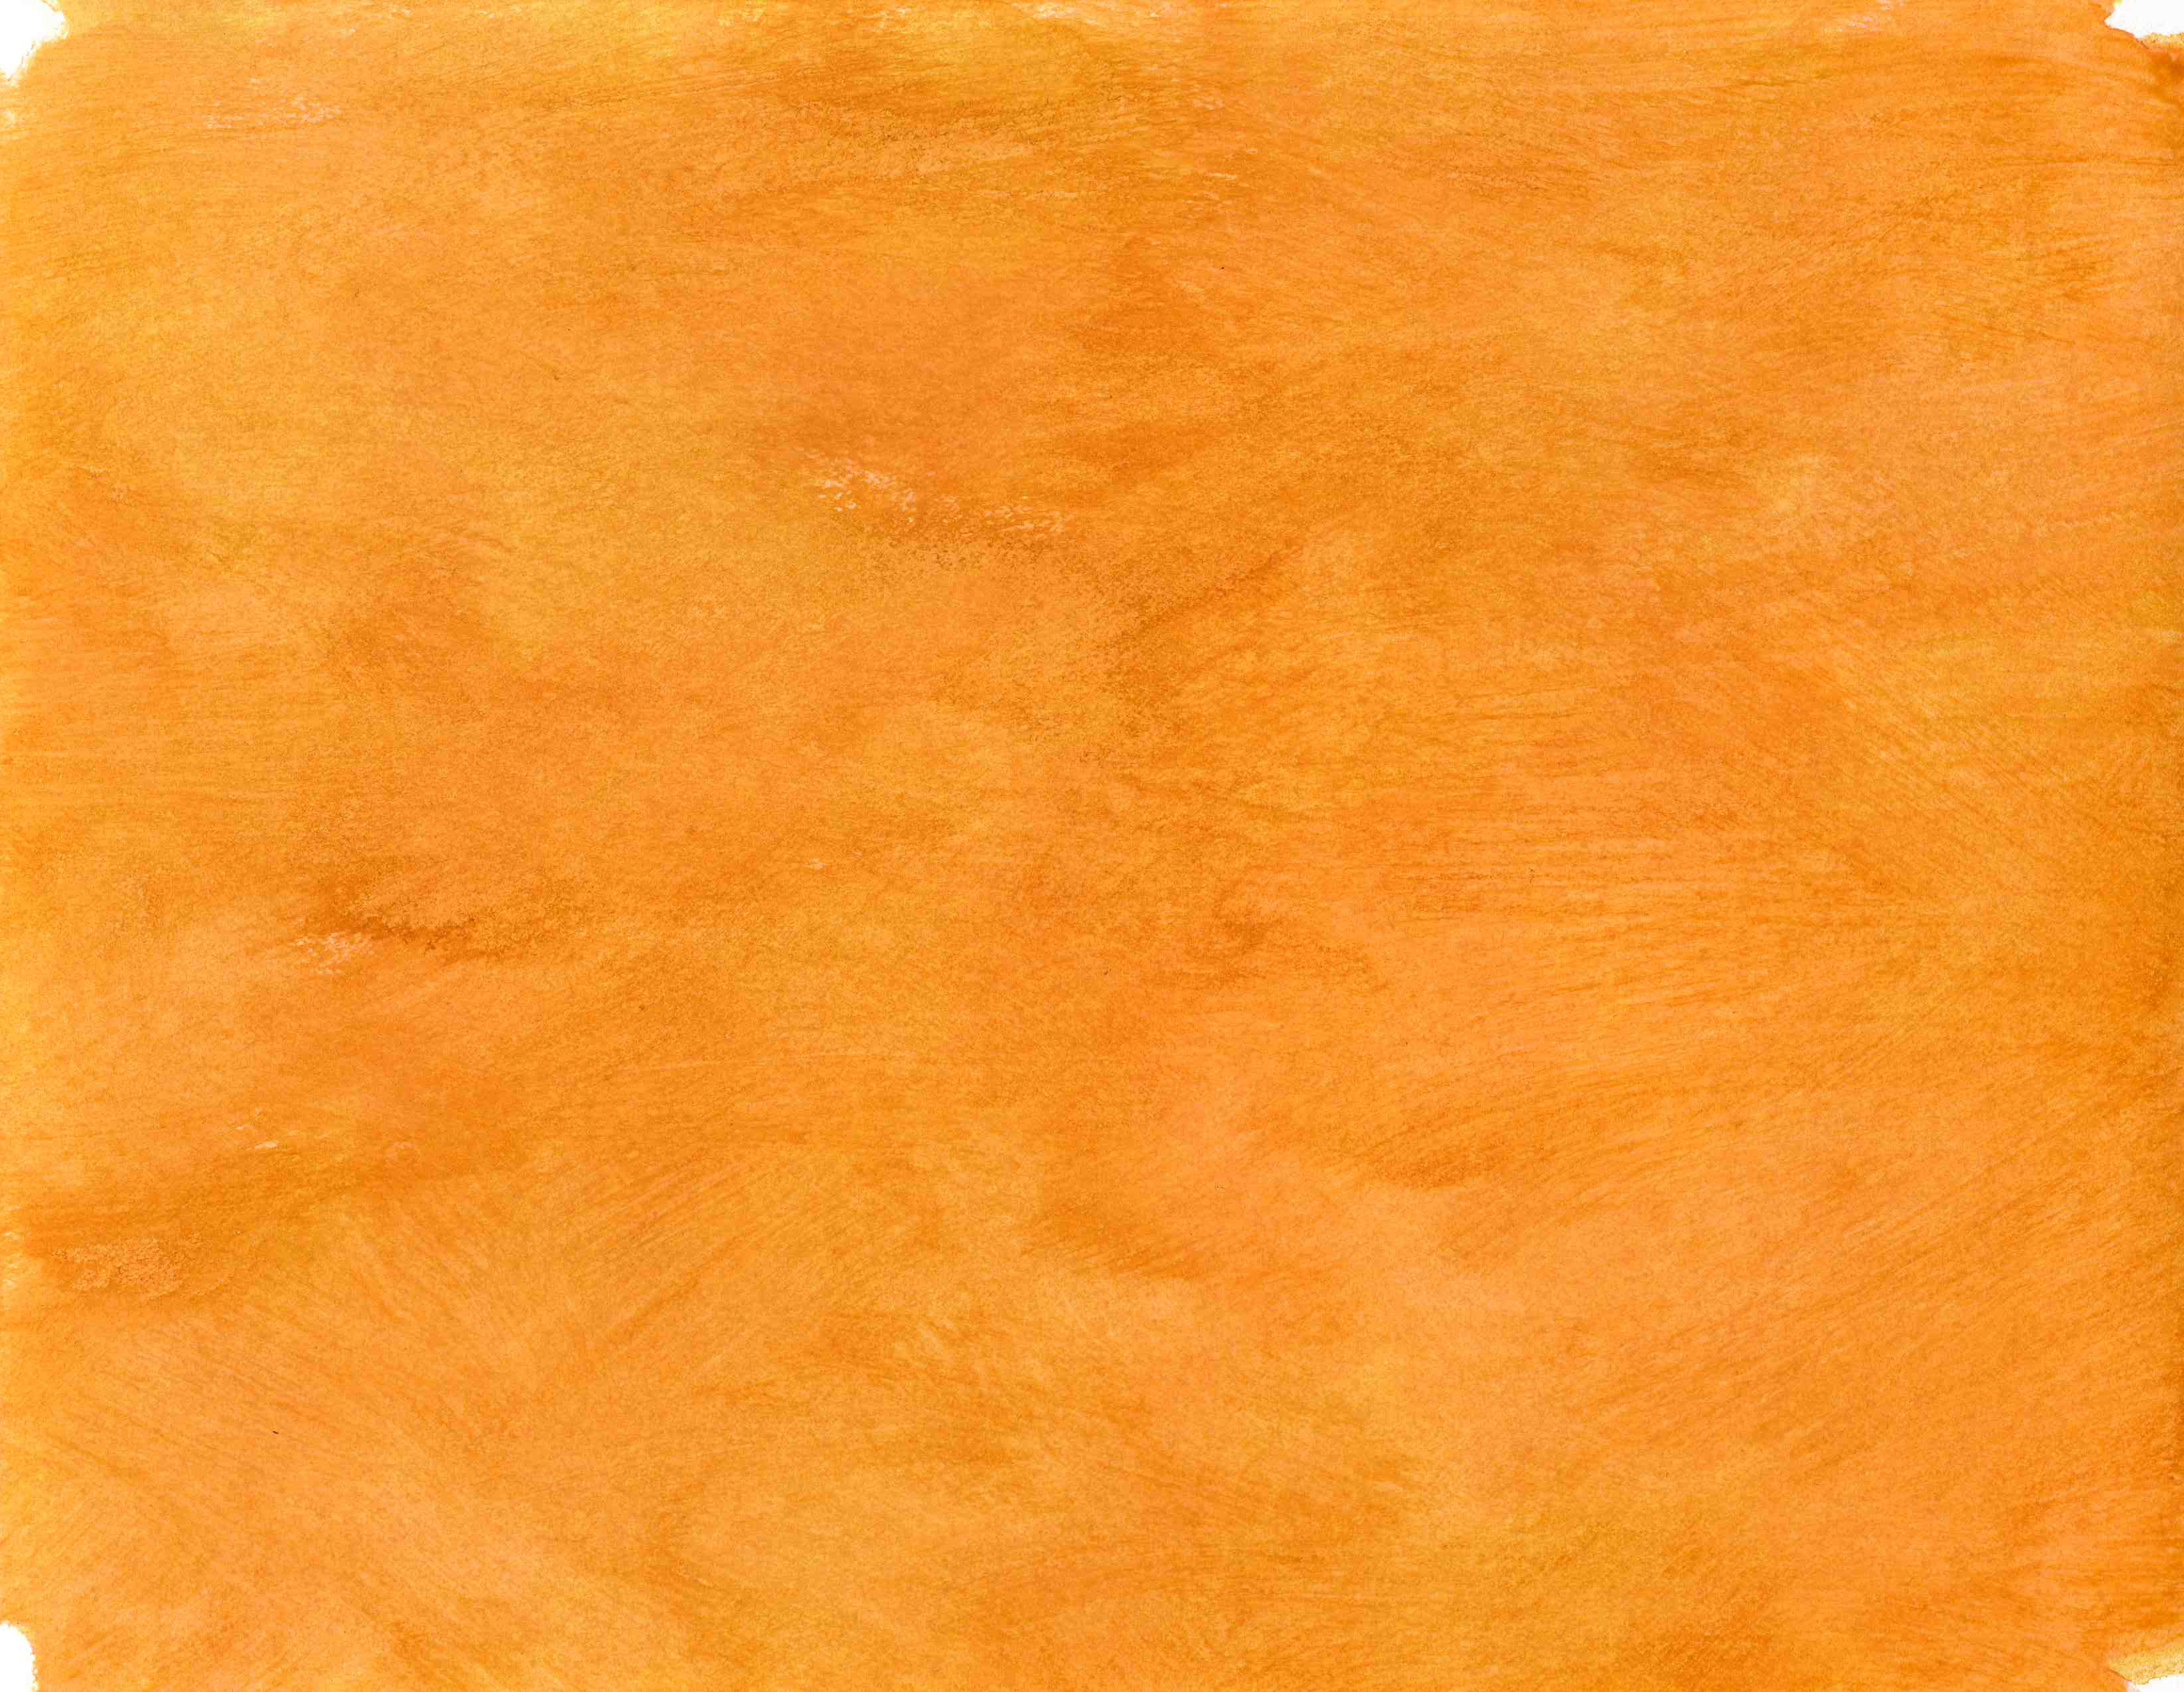 Burnt Orange Textured Background Bright orange handpainted 3279x2541